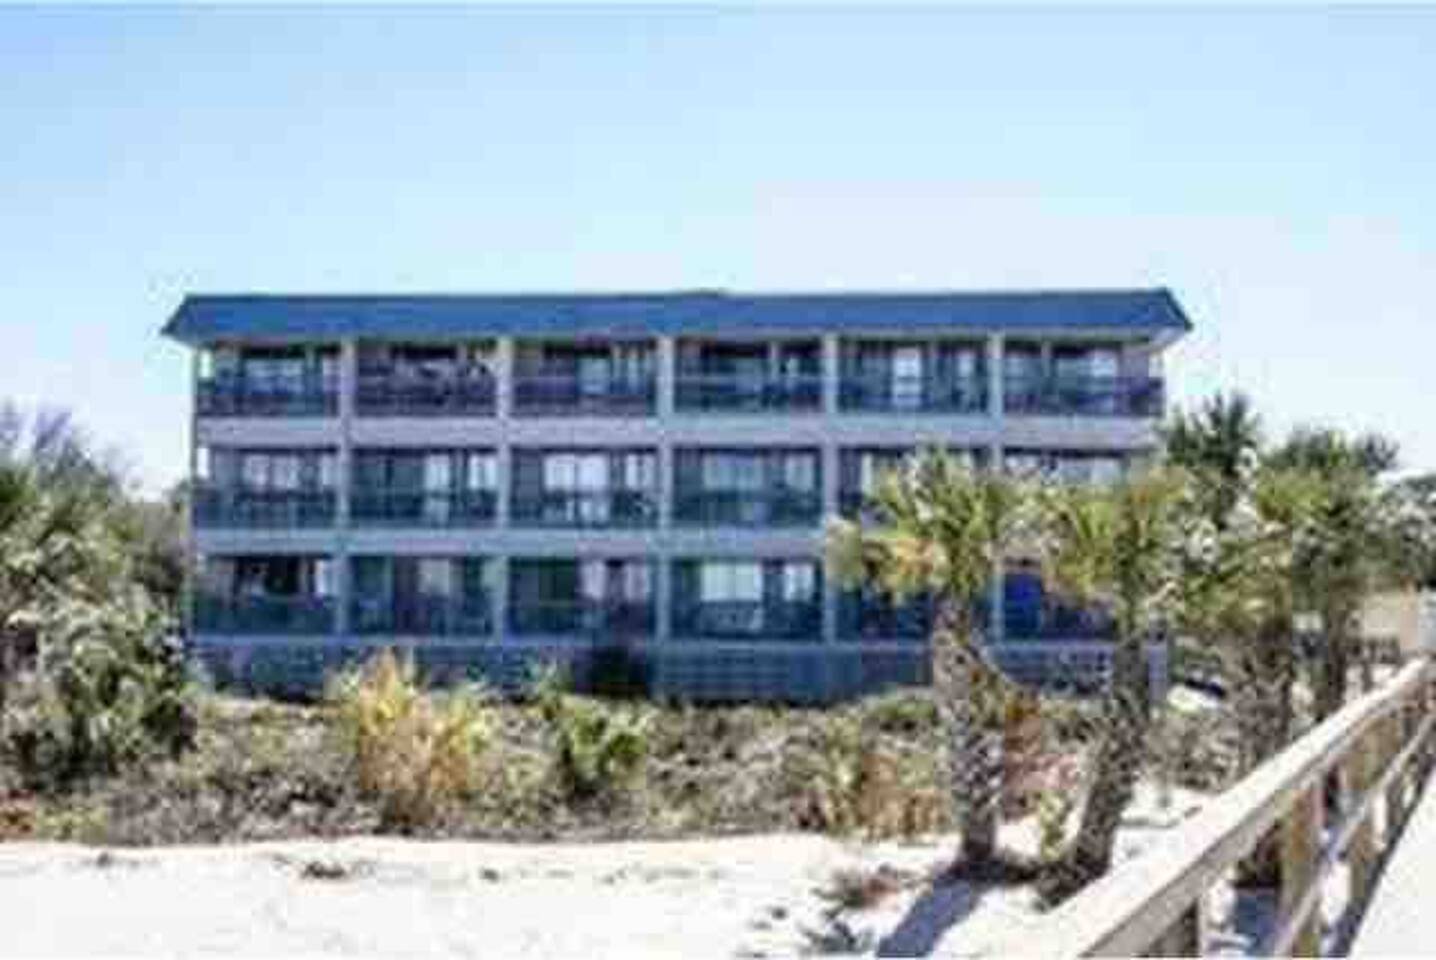 Tybee Island Vacation Rental